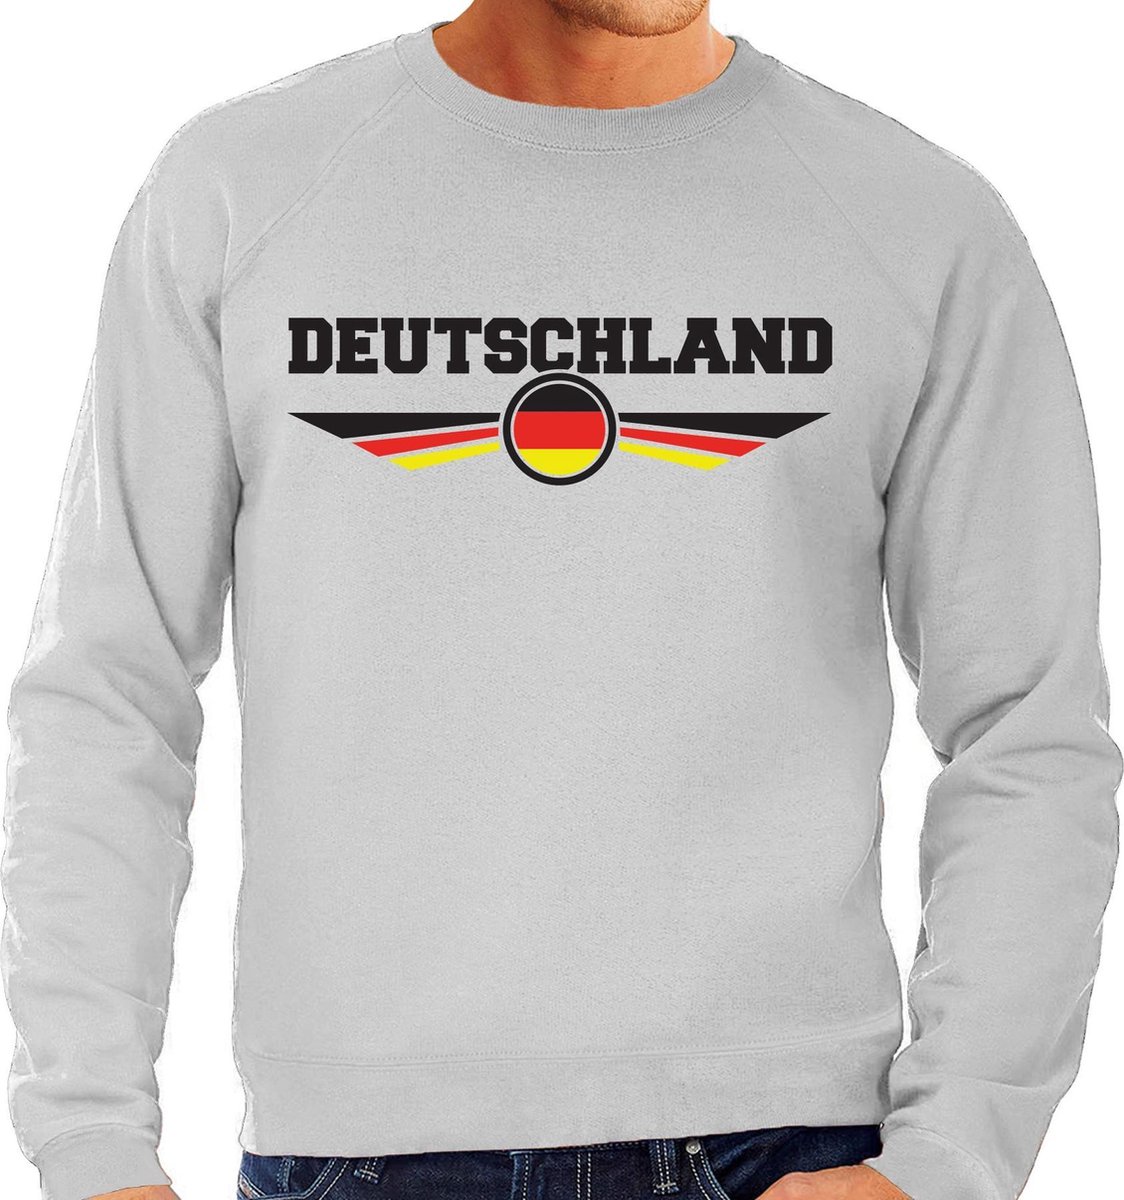 Duitsland / Deutschland landen sweater / trui grijs heren 2XL